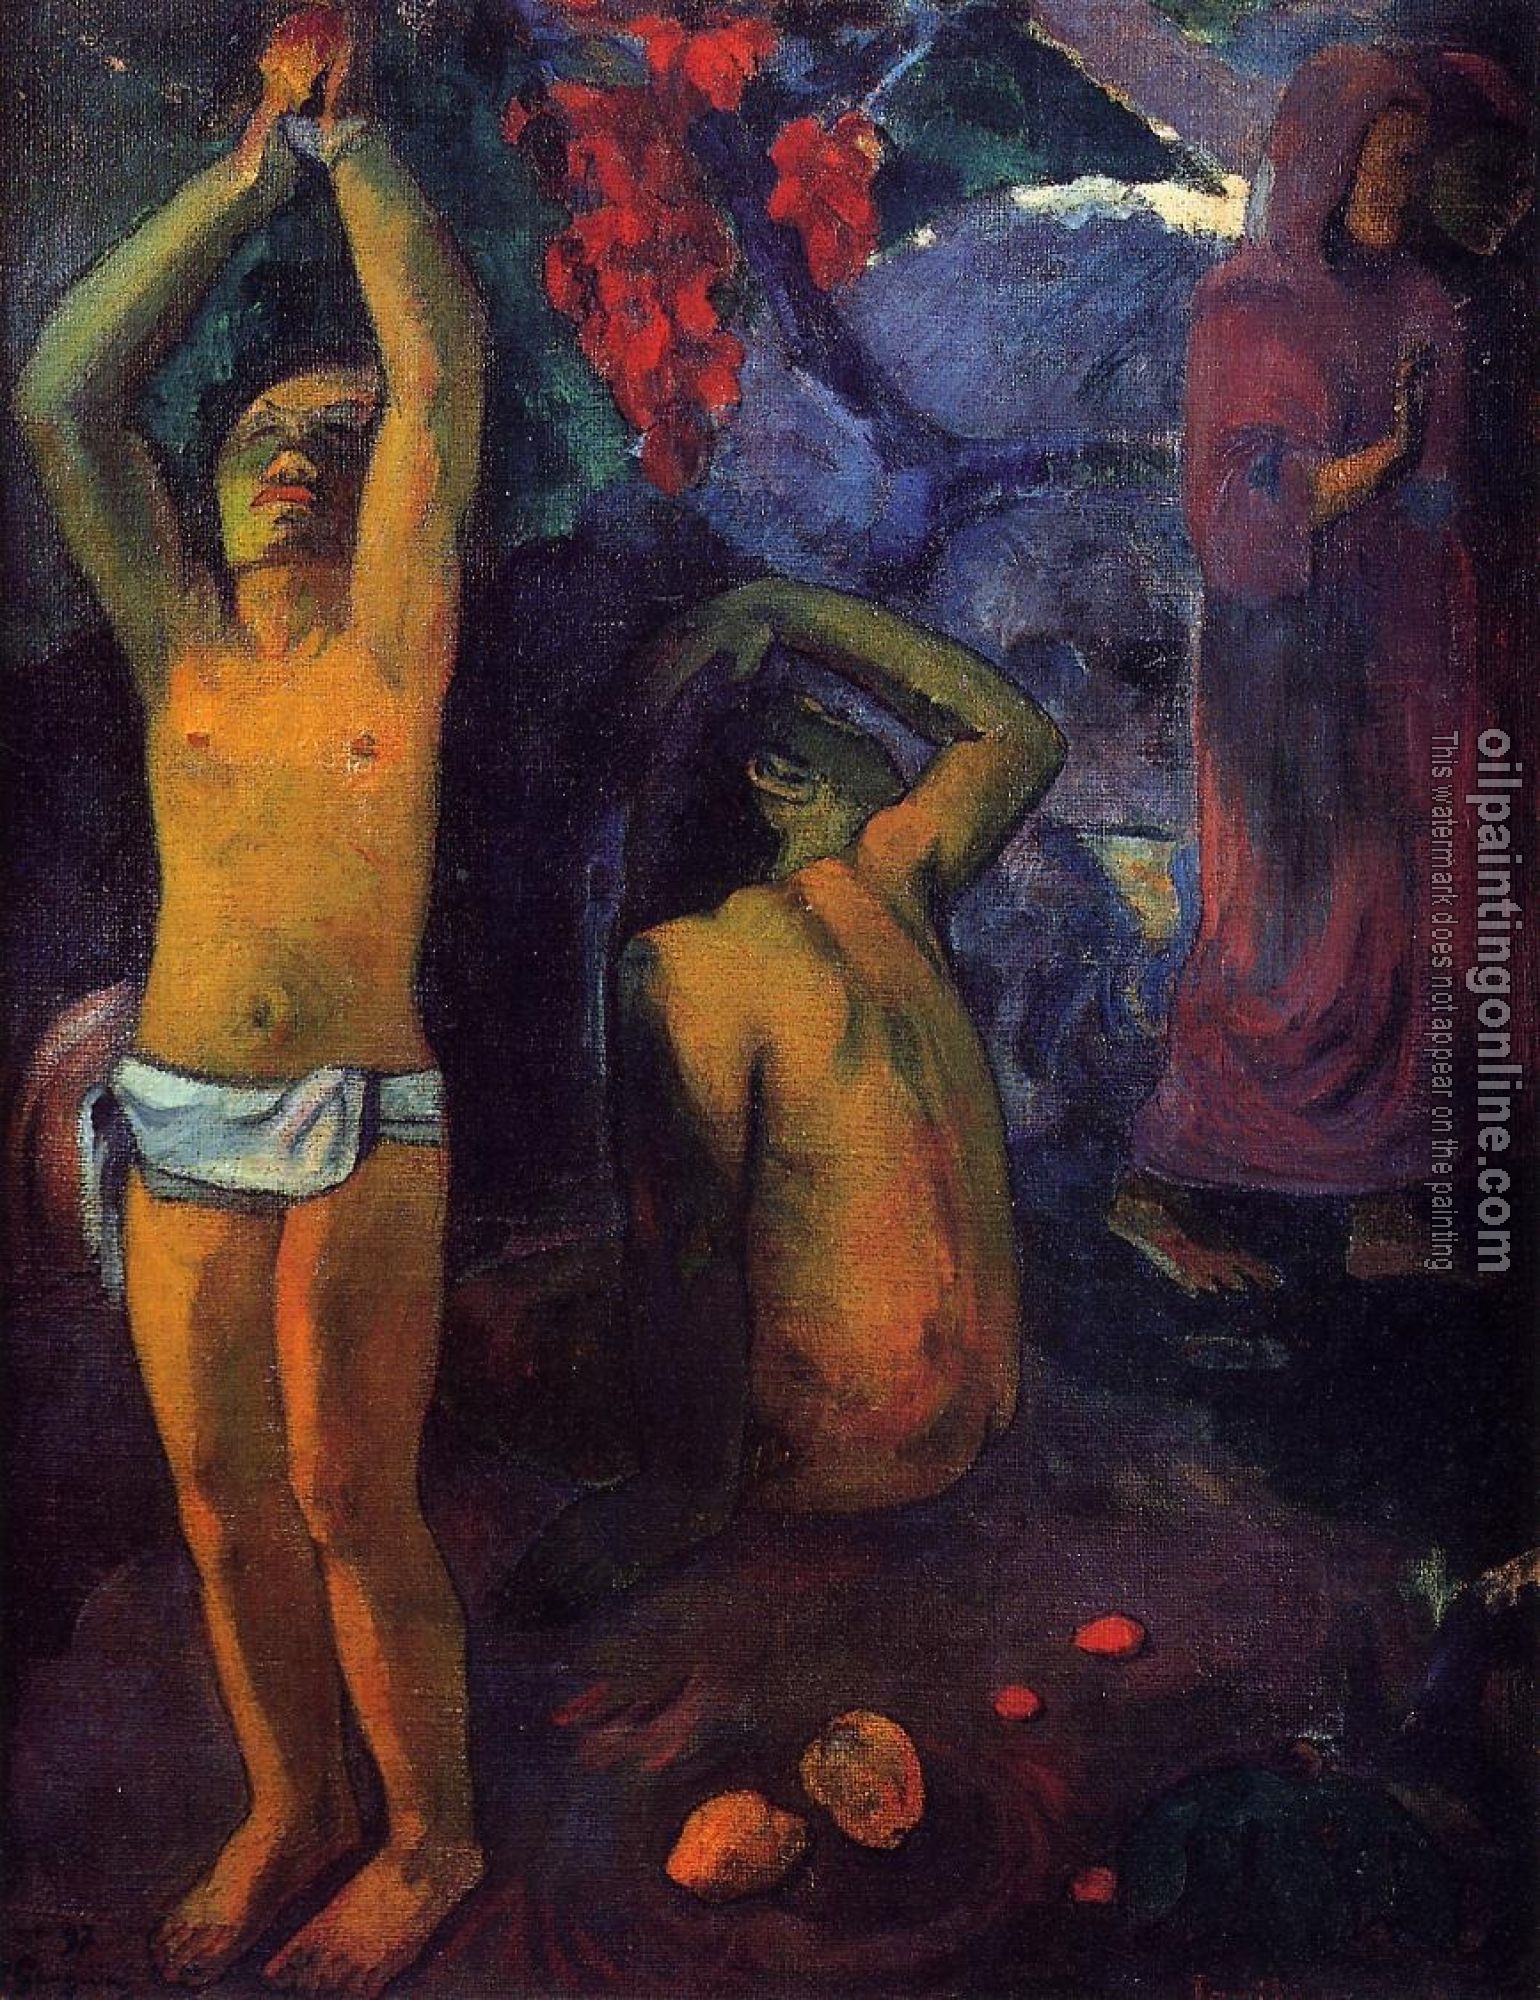 Gauguin, Paul - Tahitian Man with His Arms Raised